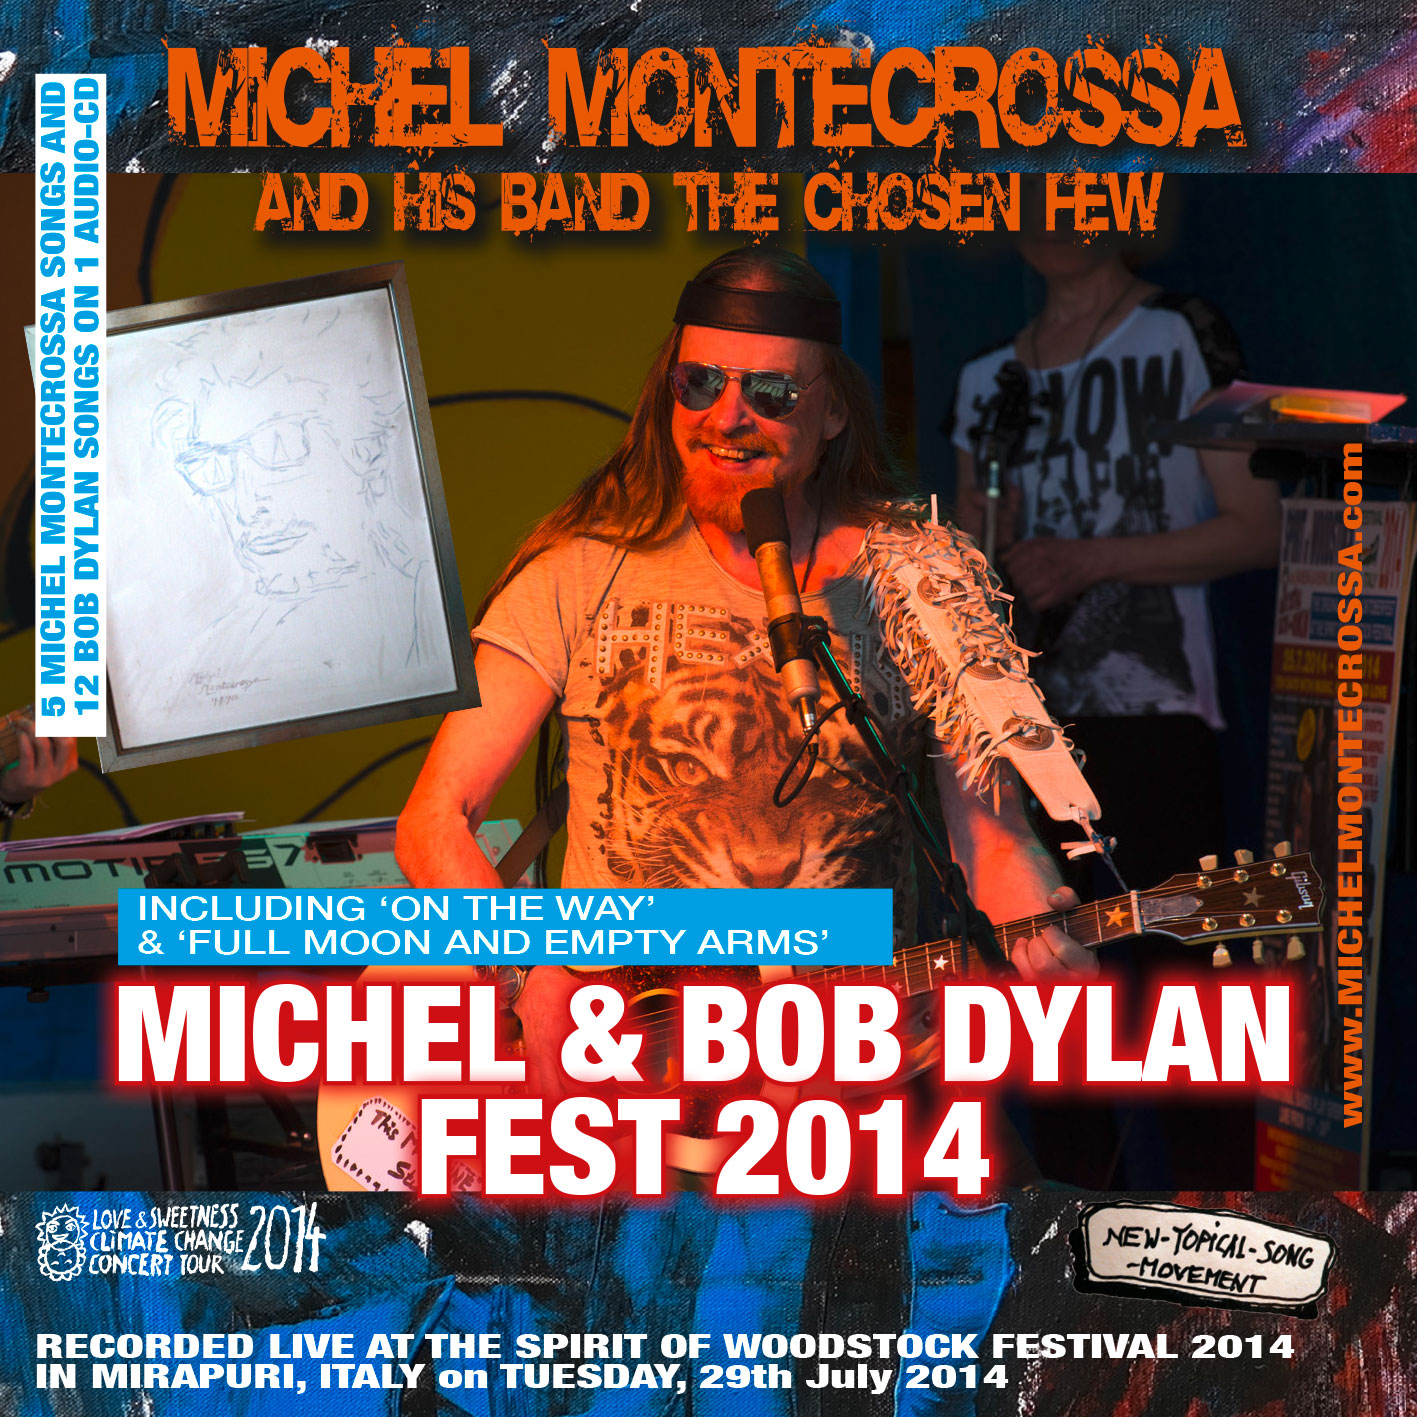 Michel Montecrossa's Michel & Bob Dylan Fest 2014